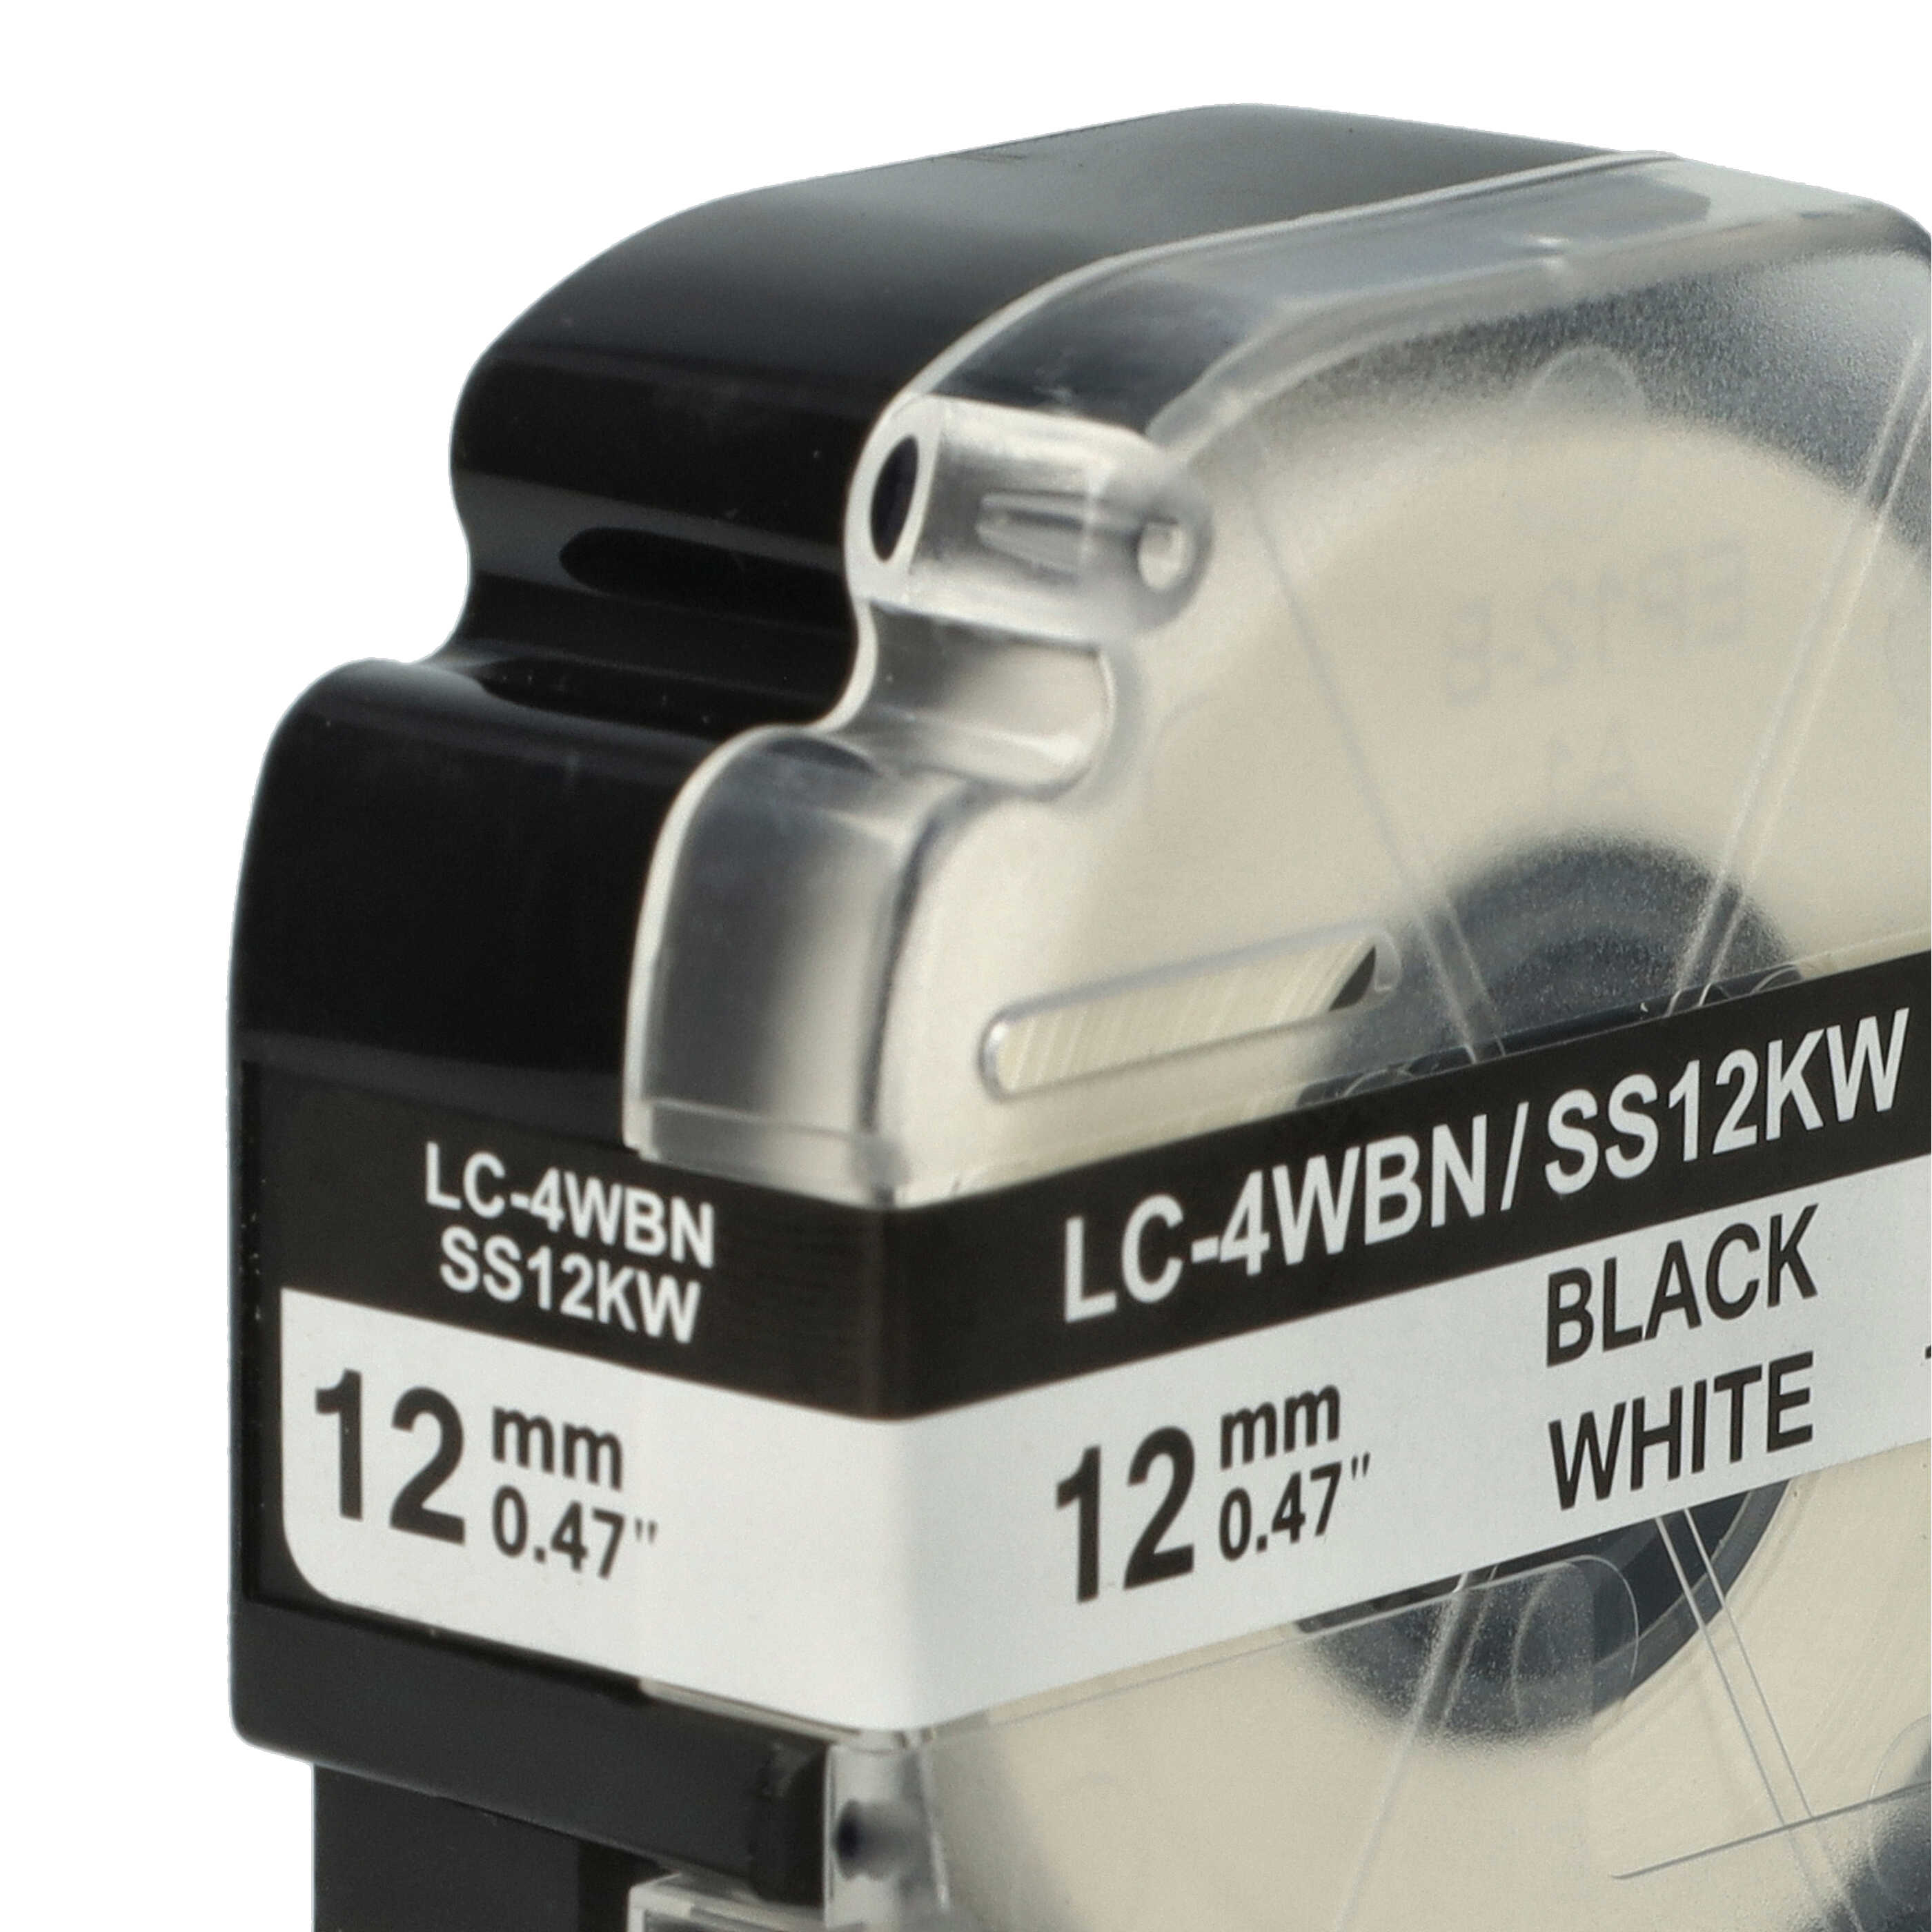 2x Casete cinta escritura reemplaza Epson SS12KW, LC-4WBN Negro su Blanco